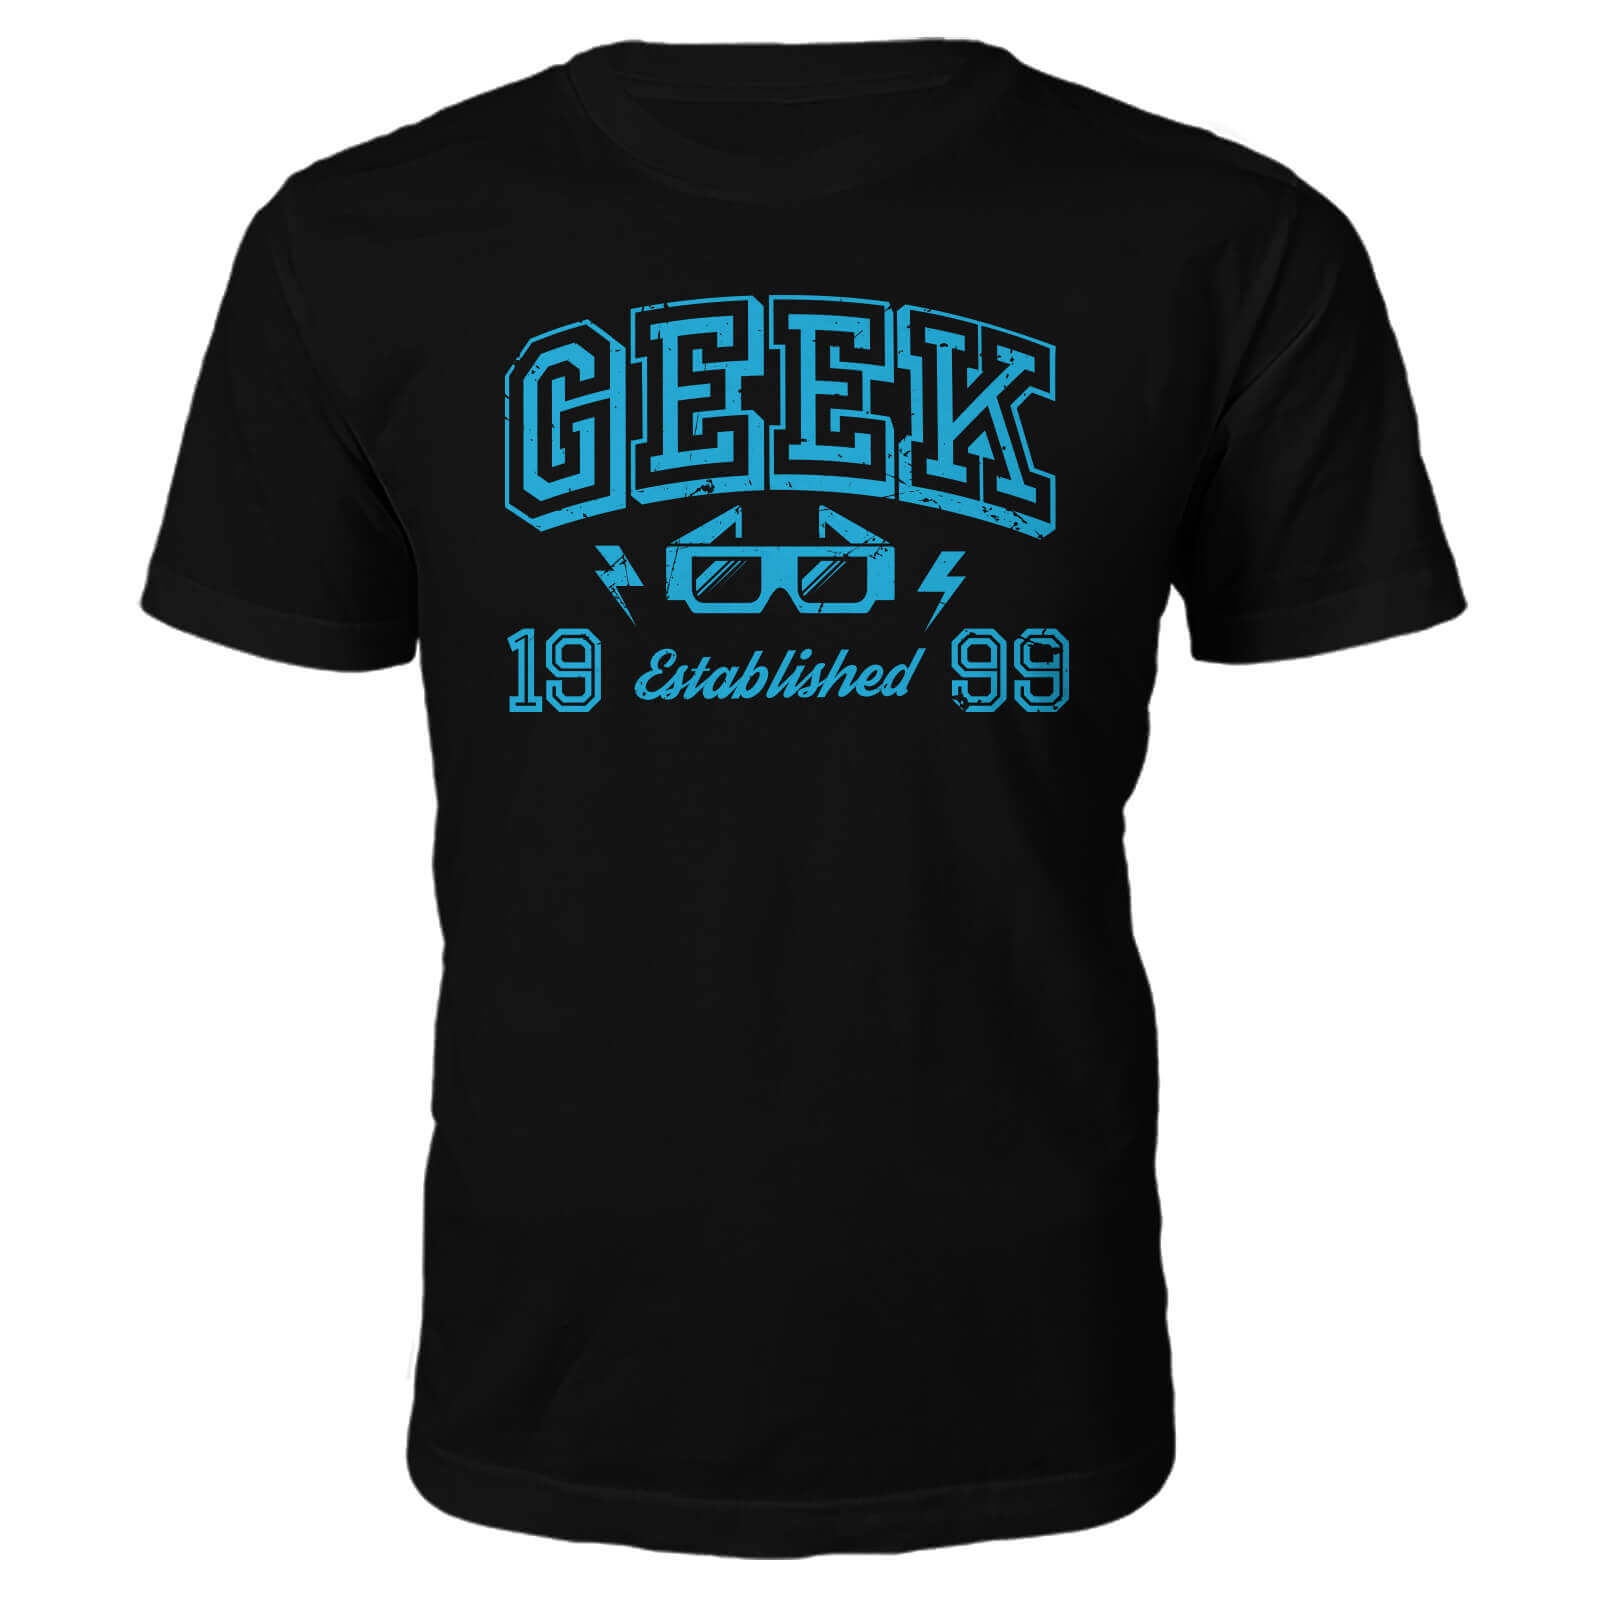 Geek Established 1990's T-Shirt- Black - XL - 1999